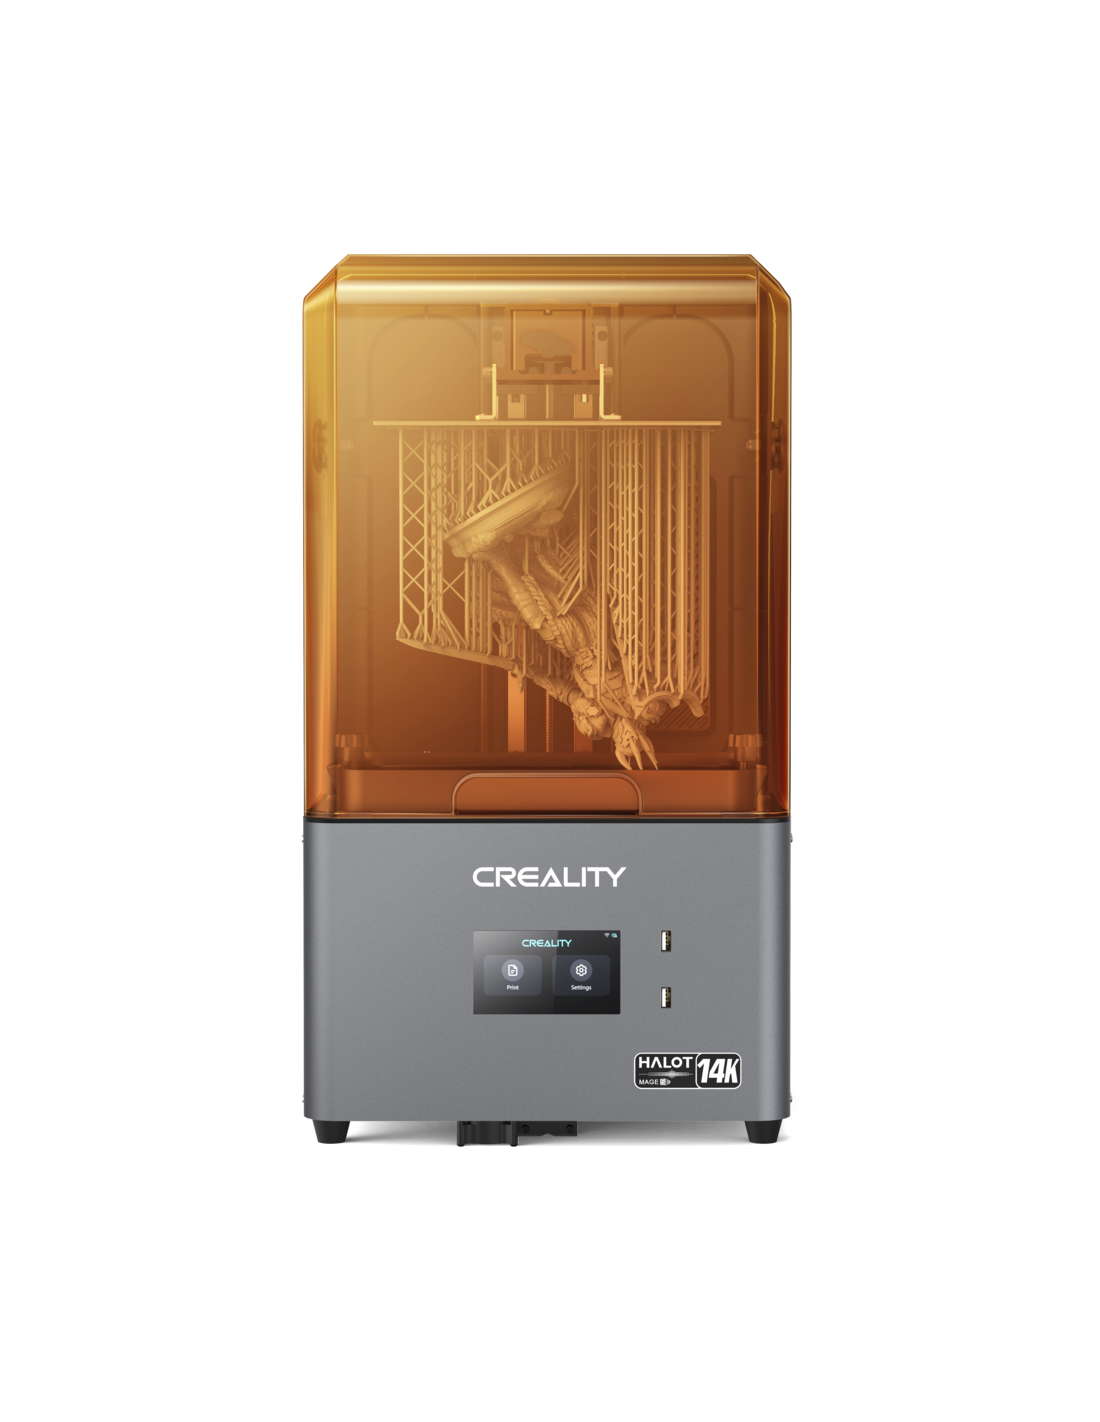 Creality Halot-Mage S - impresora 3D de resina